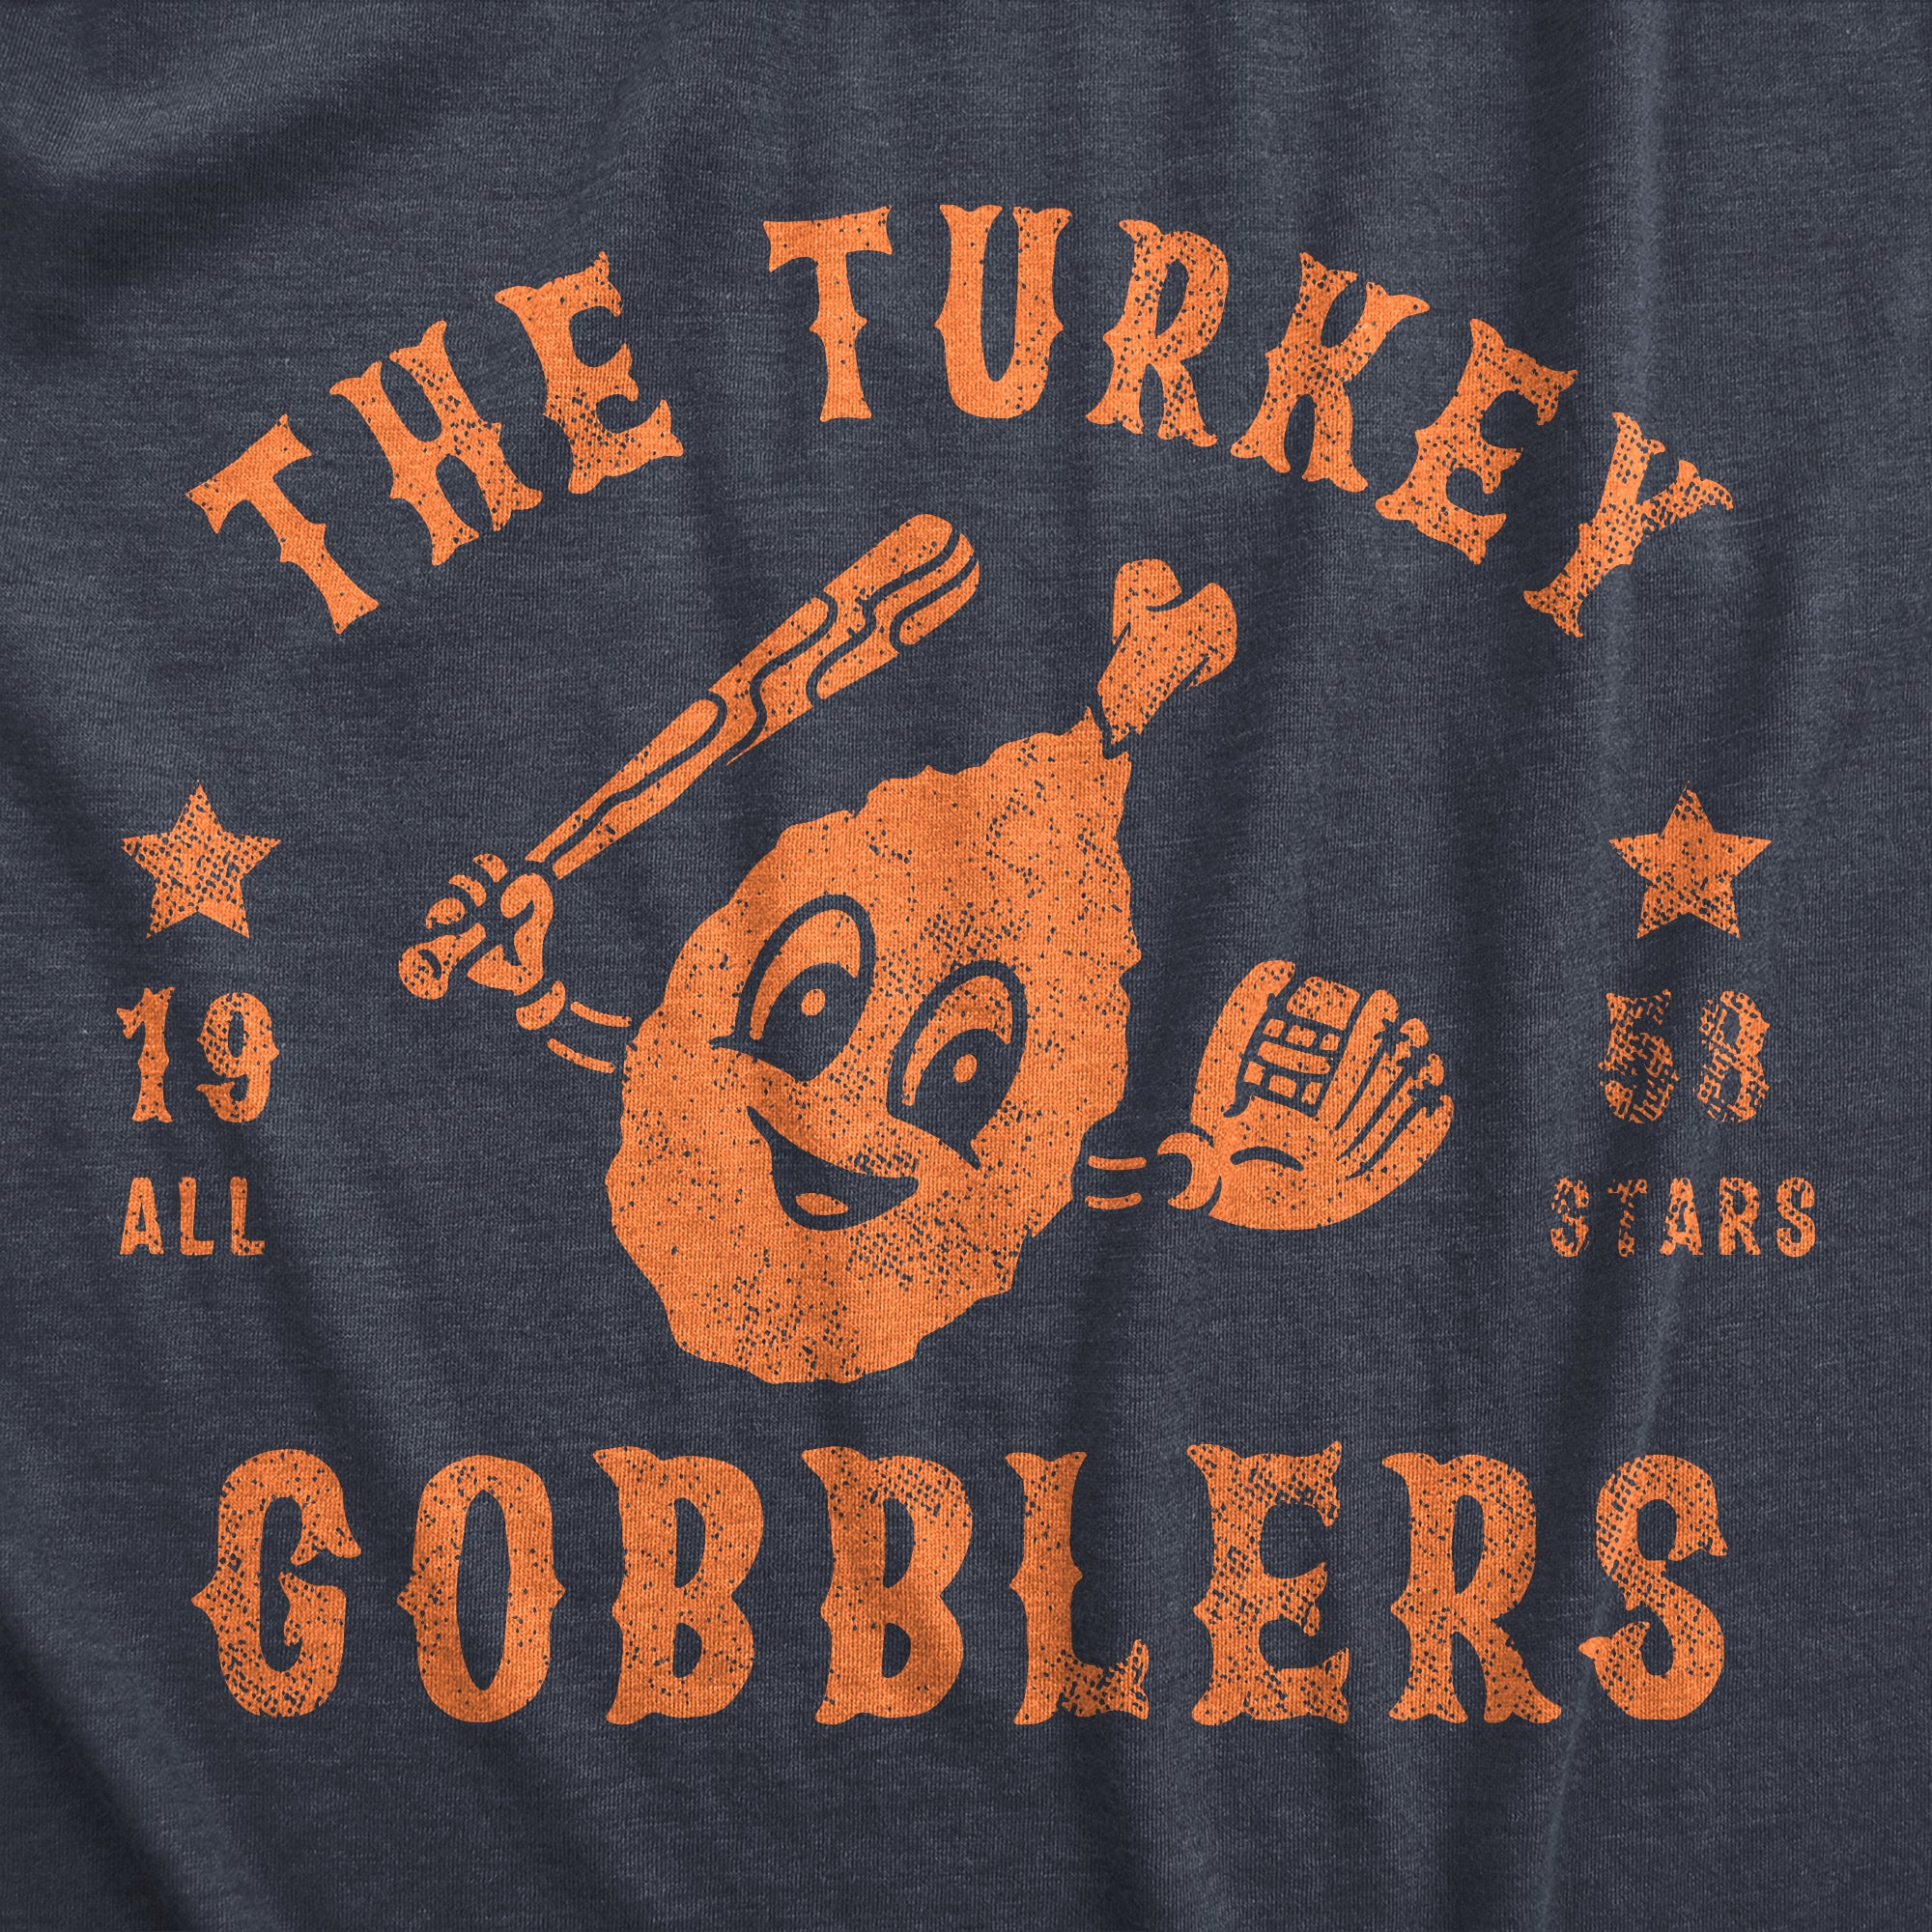 Funny Heather Navy - GOBBLERS The Turkey Gobblers All Stars Mens T Shirt Nerdy Thanksgiving Baseball Tee